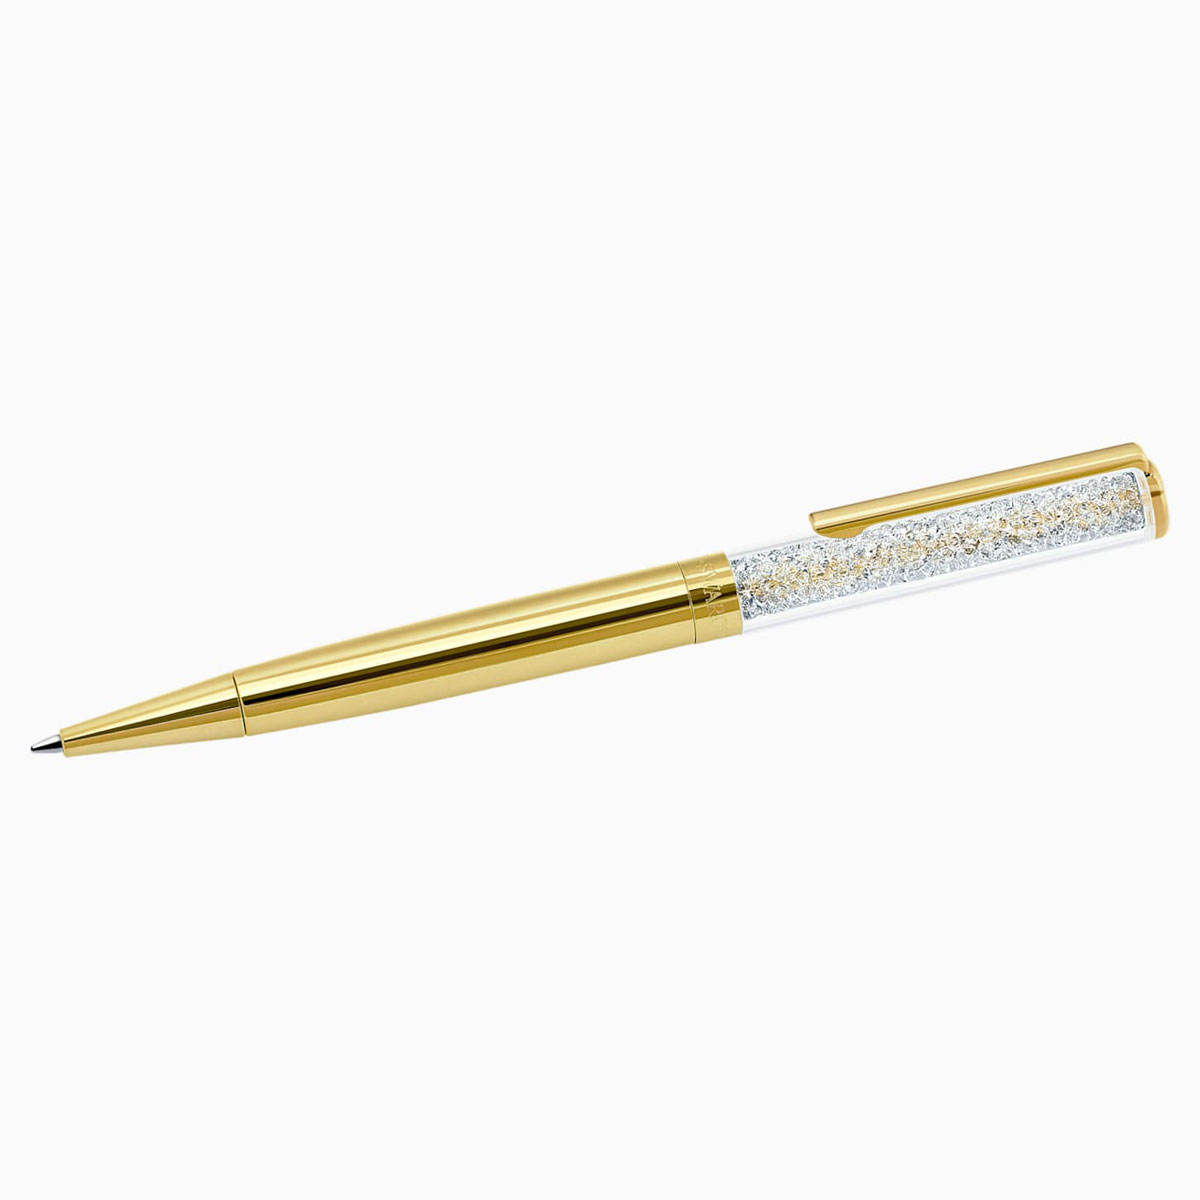 Swarovski Crystalline Ballpoint Pen, Pale Gold Plated